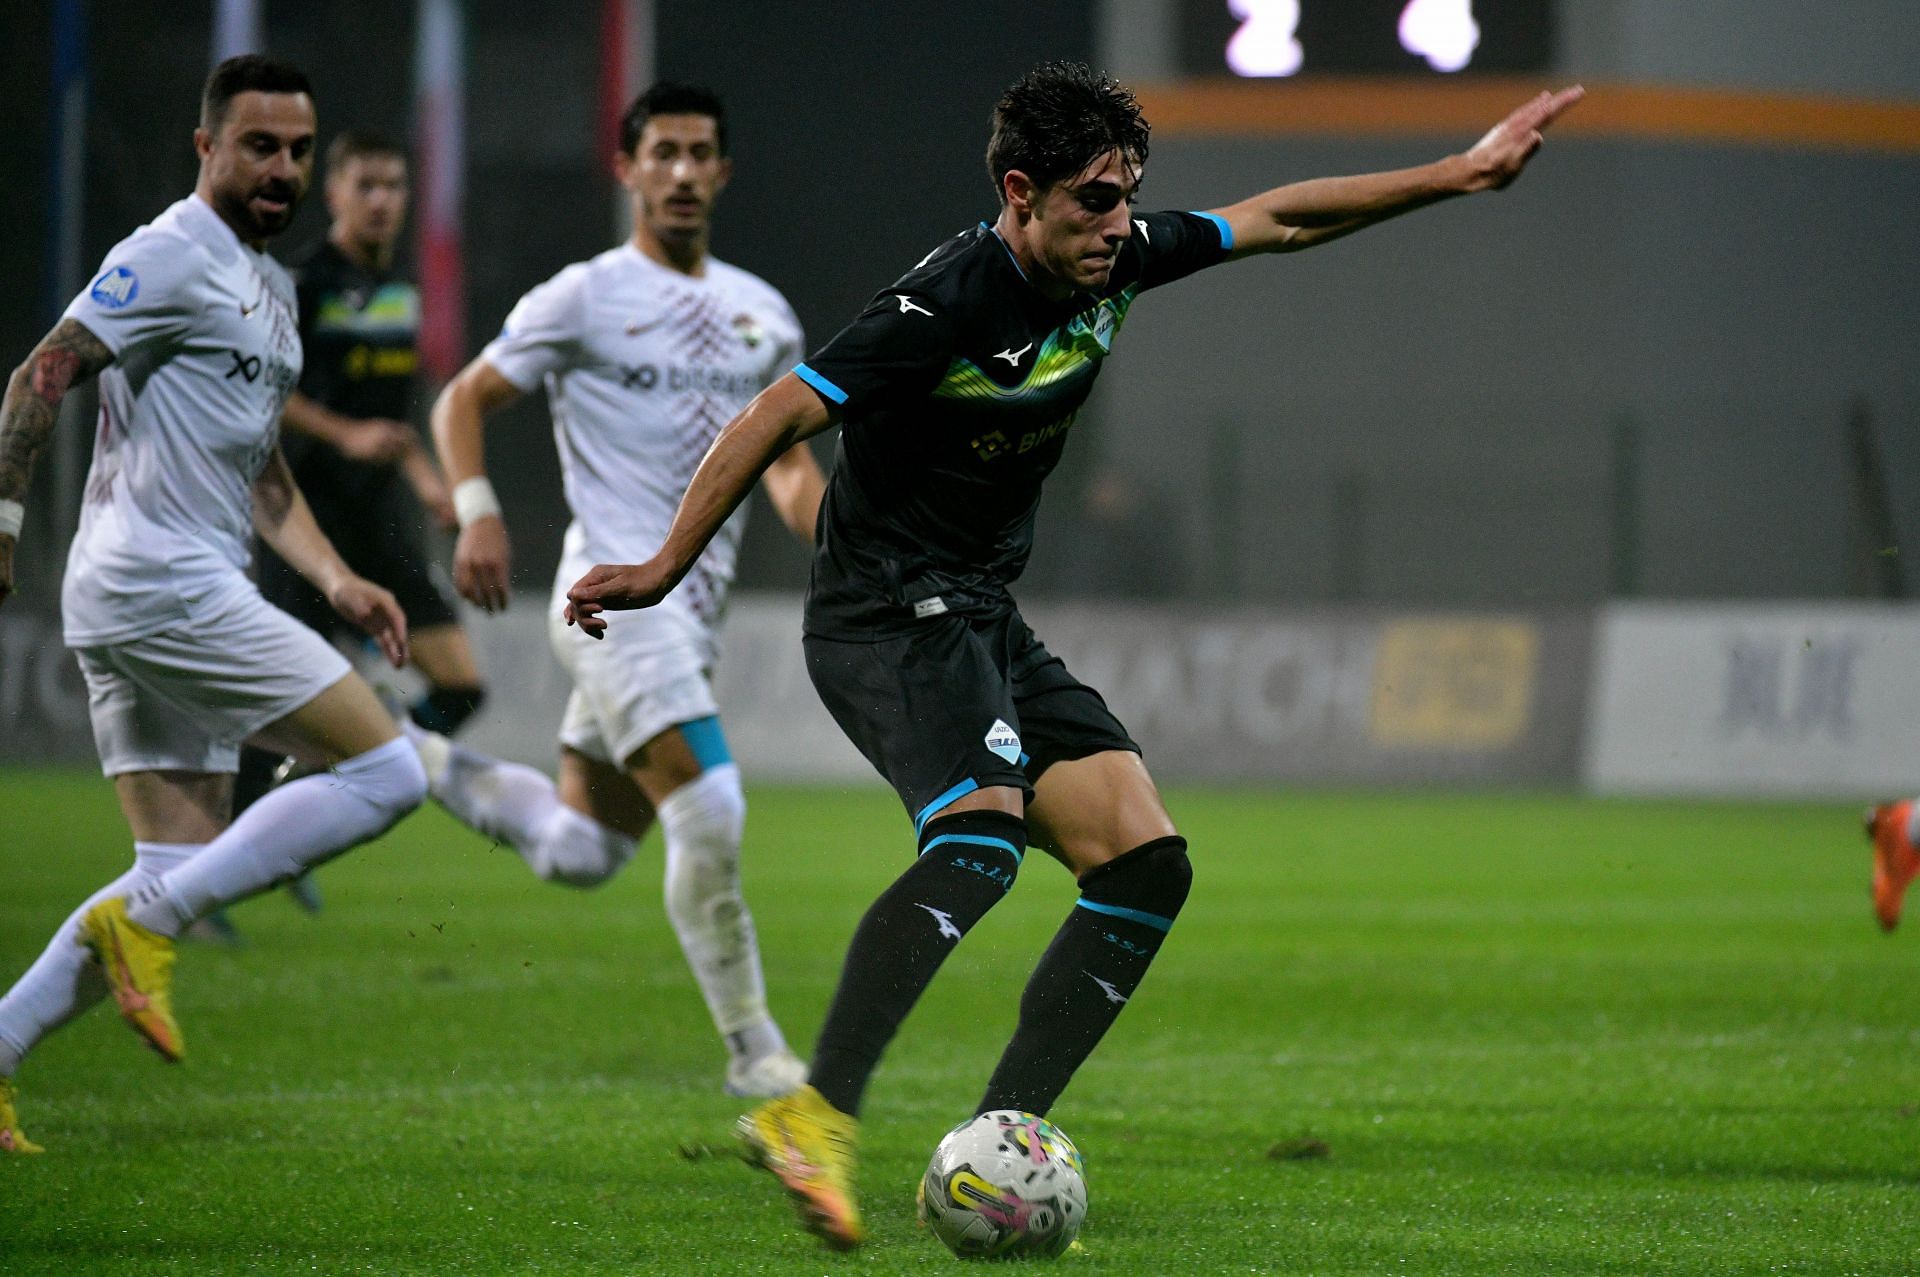 Hatayspor v SS Lazio - Friendly Match